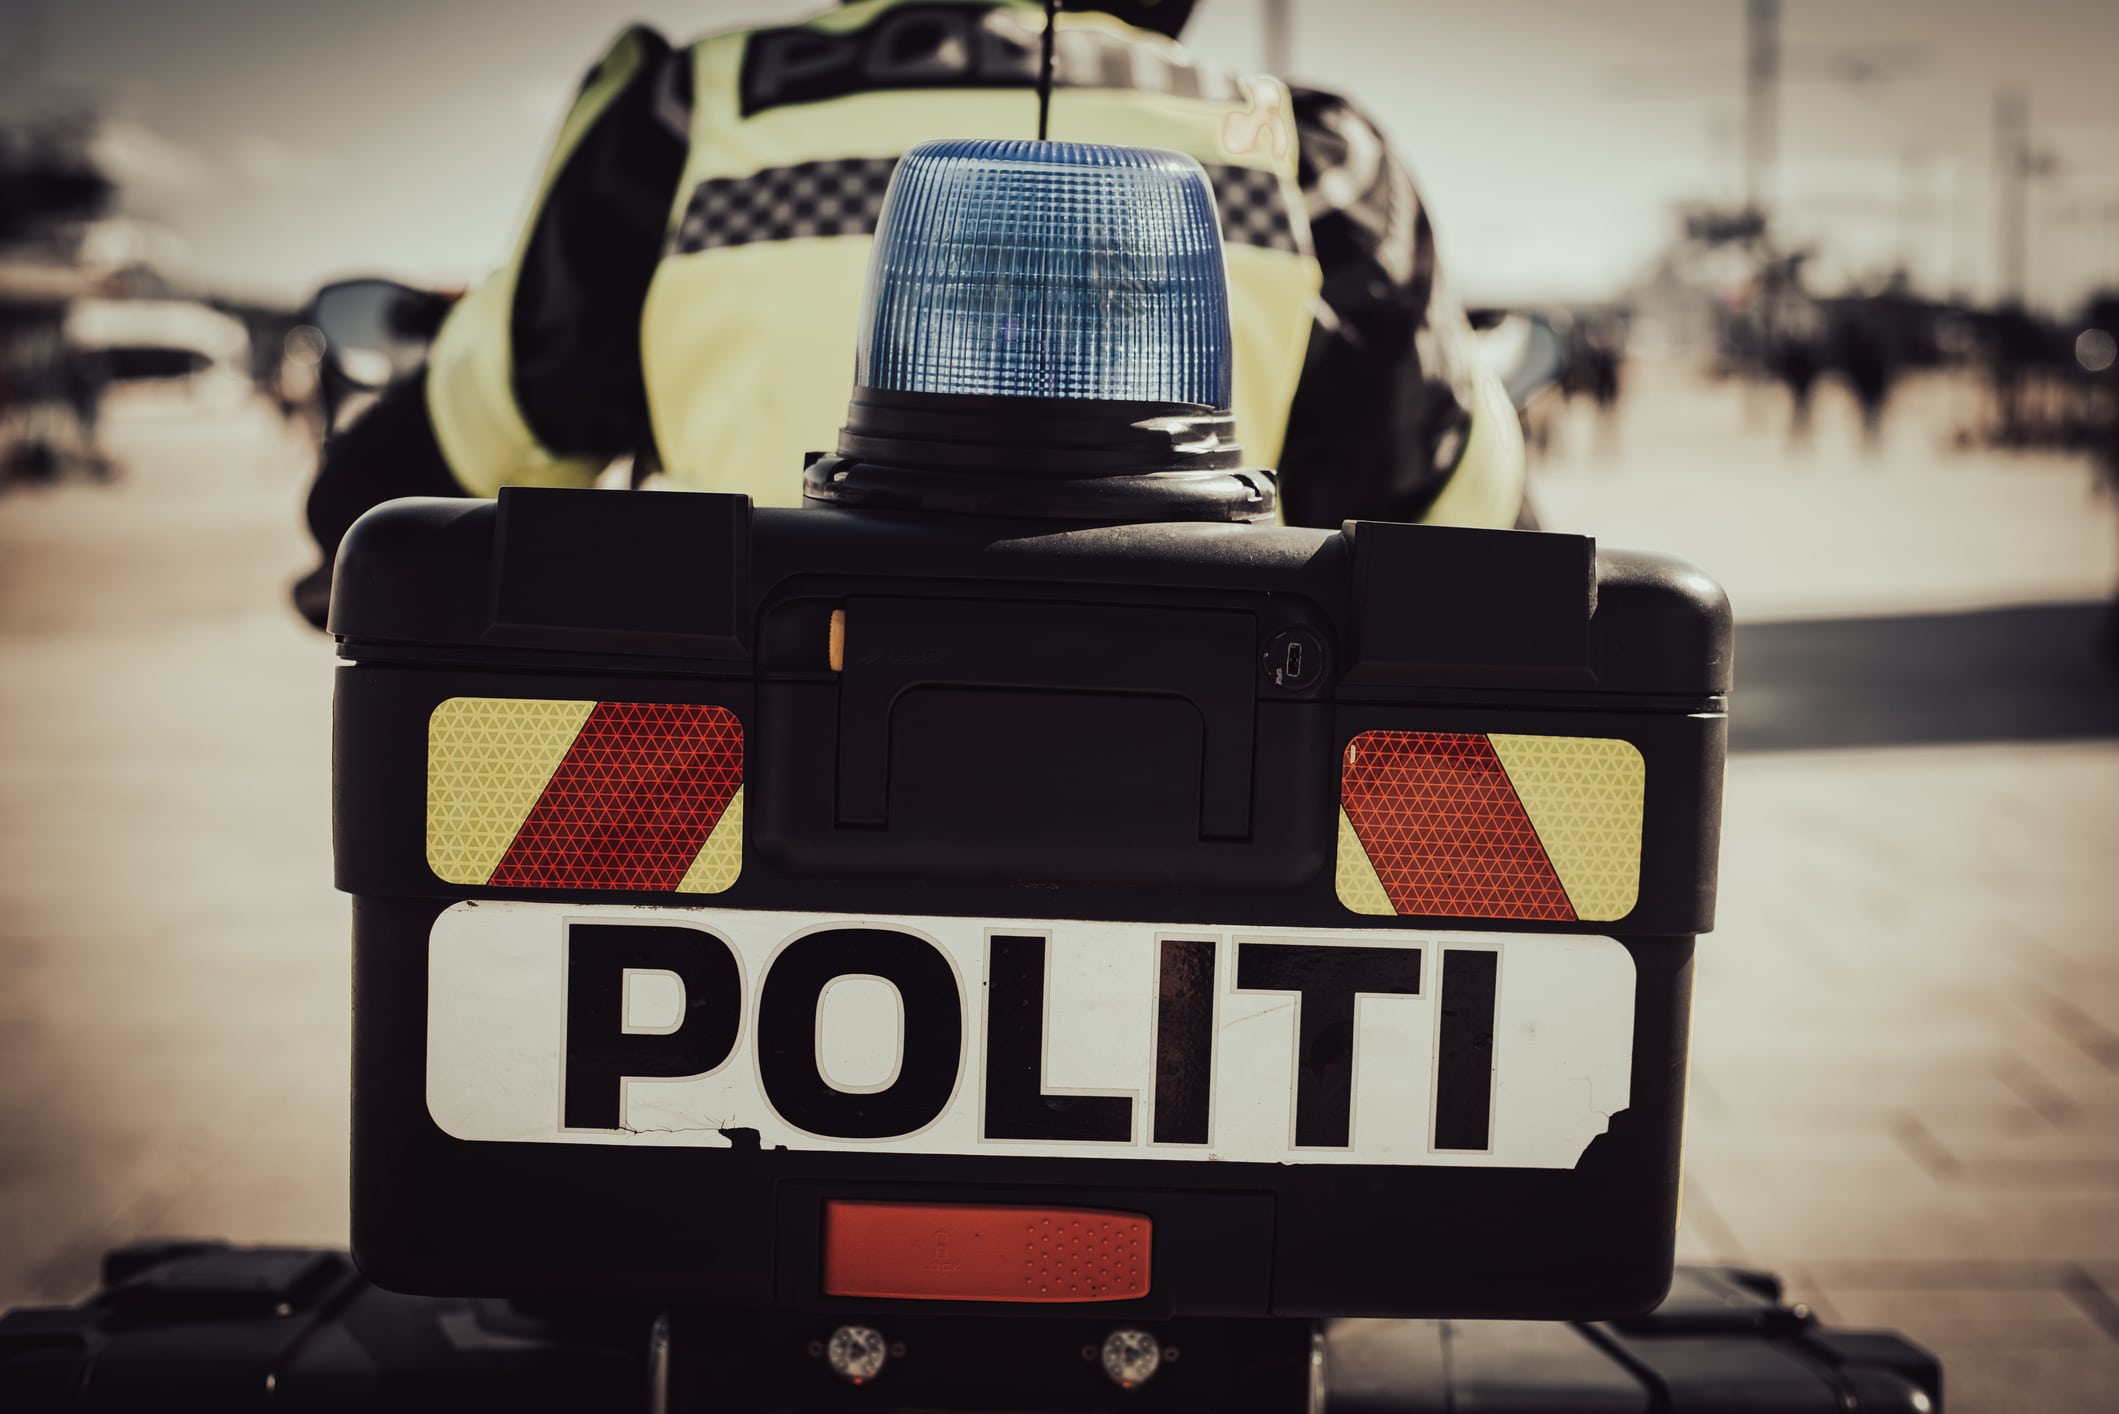 Politi og motorsykkel